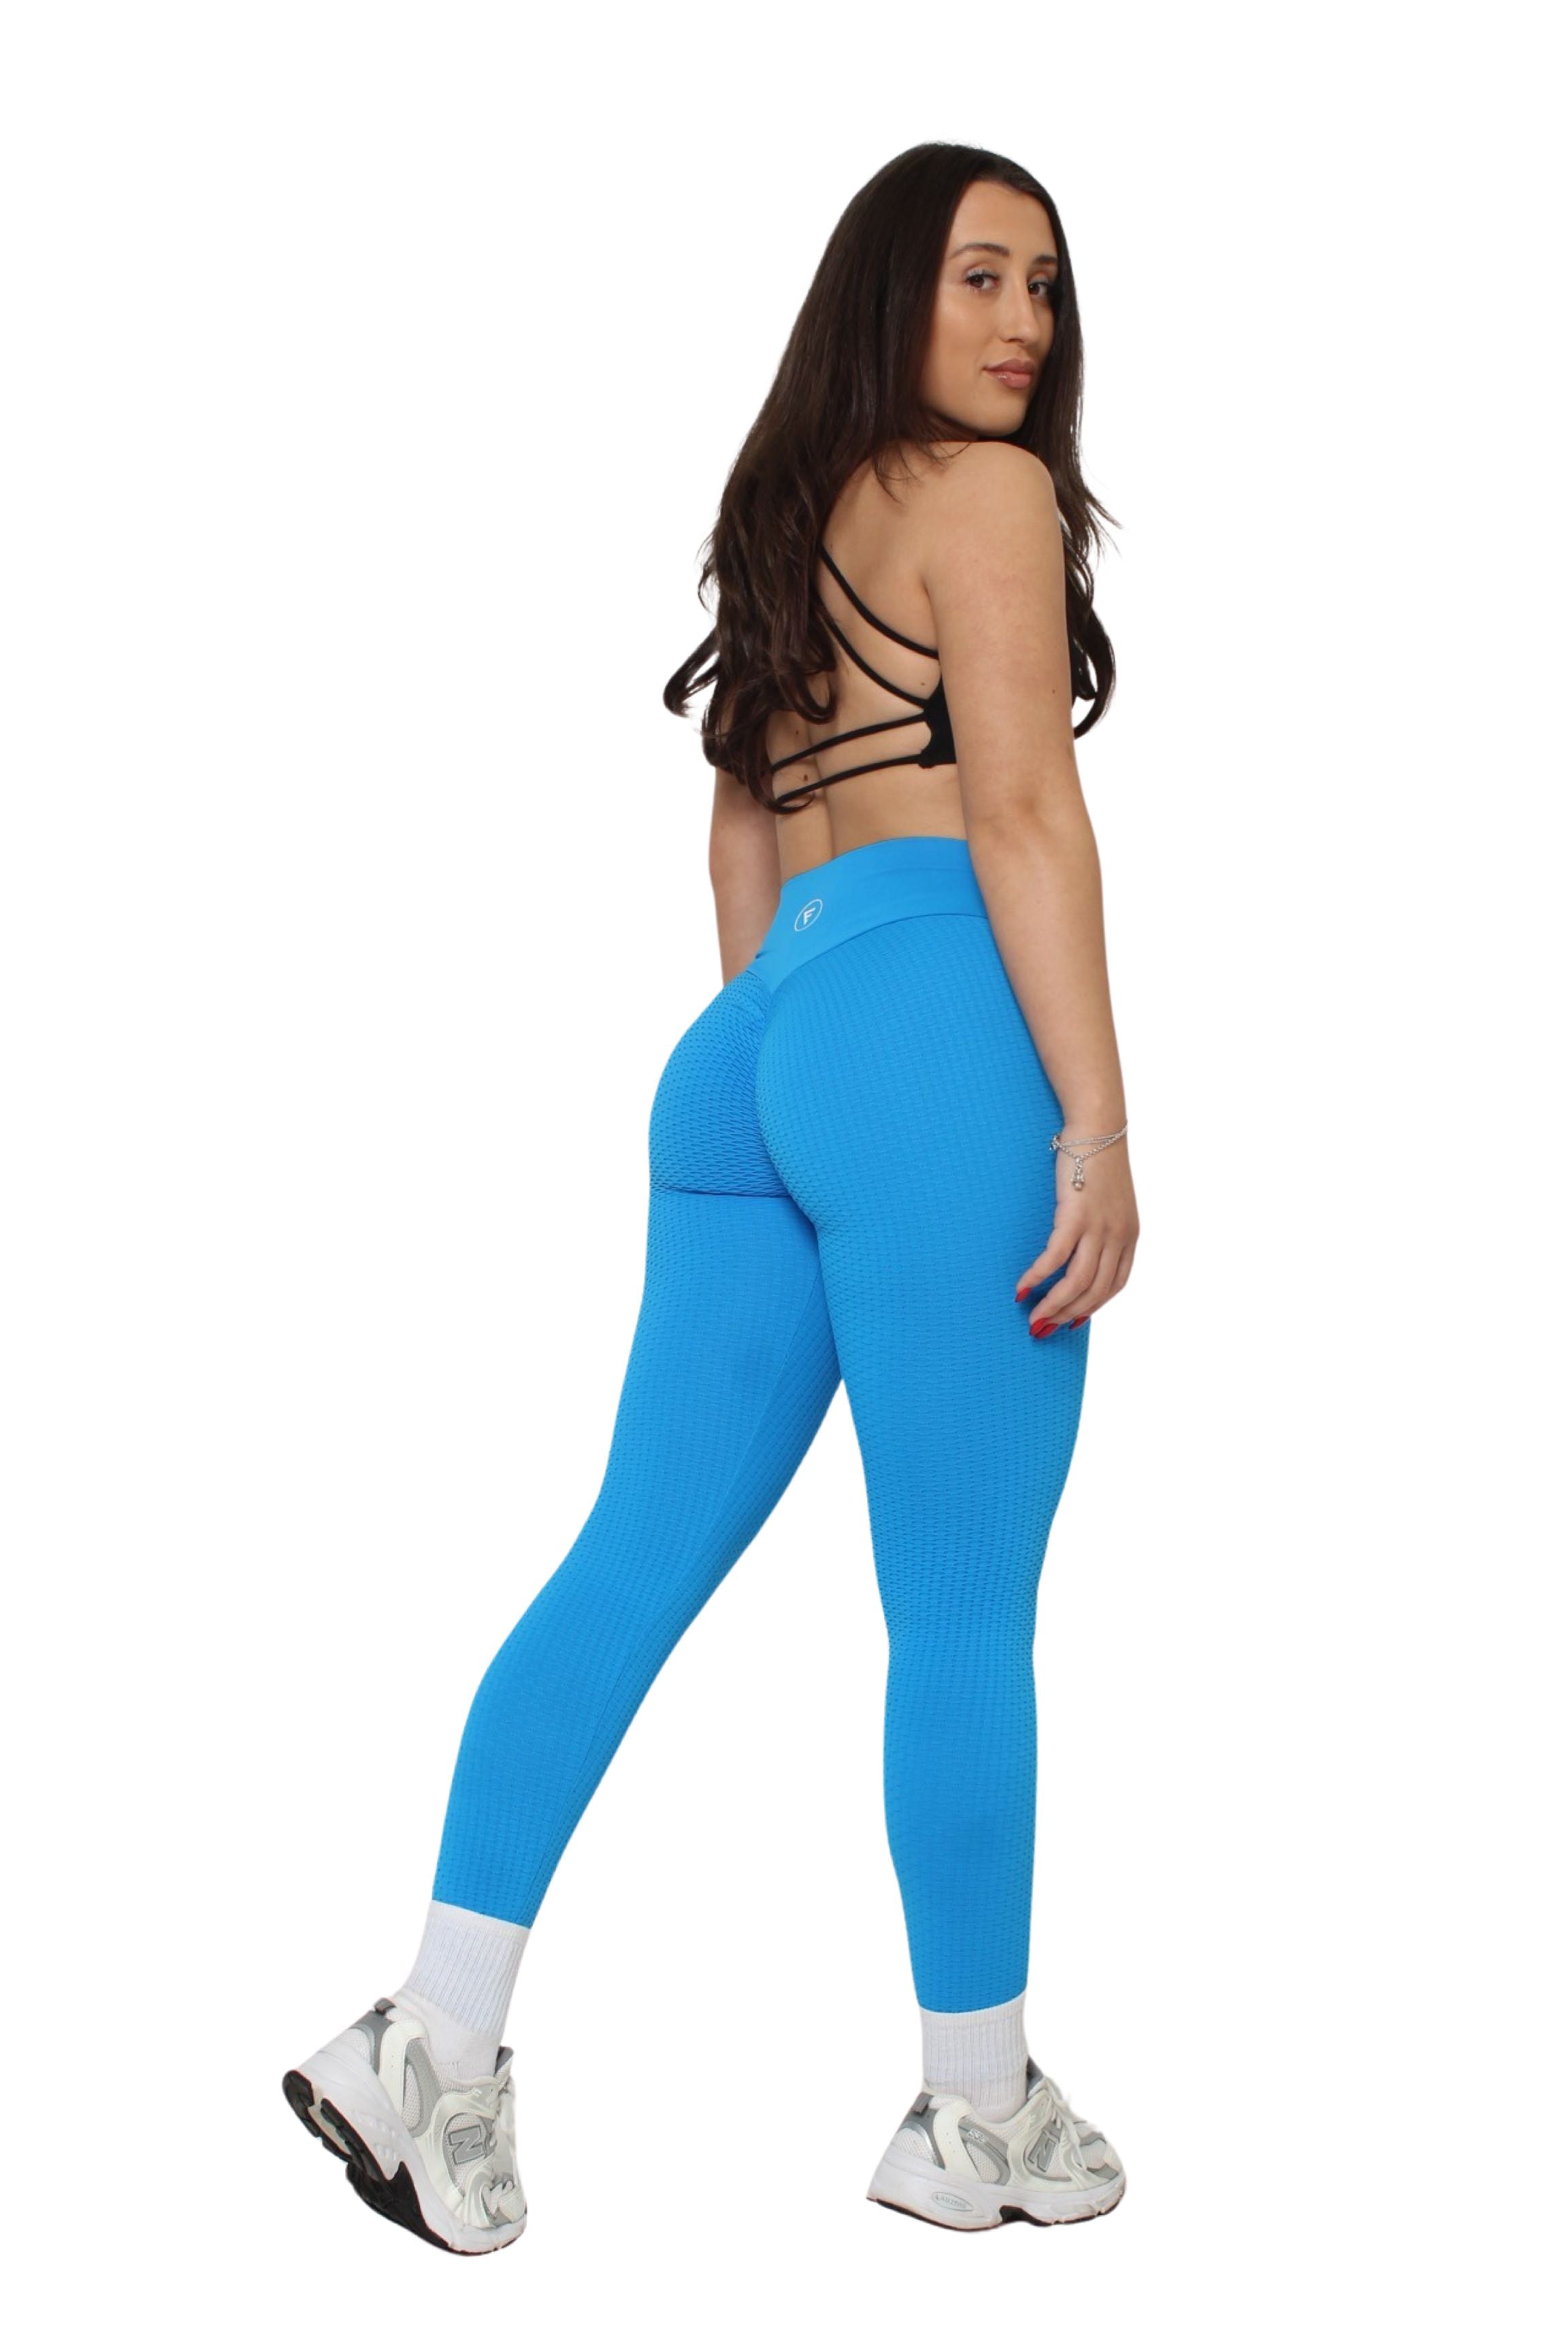  Y-blue Scrunch Butt Lifting Leggings for Women High